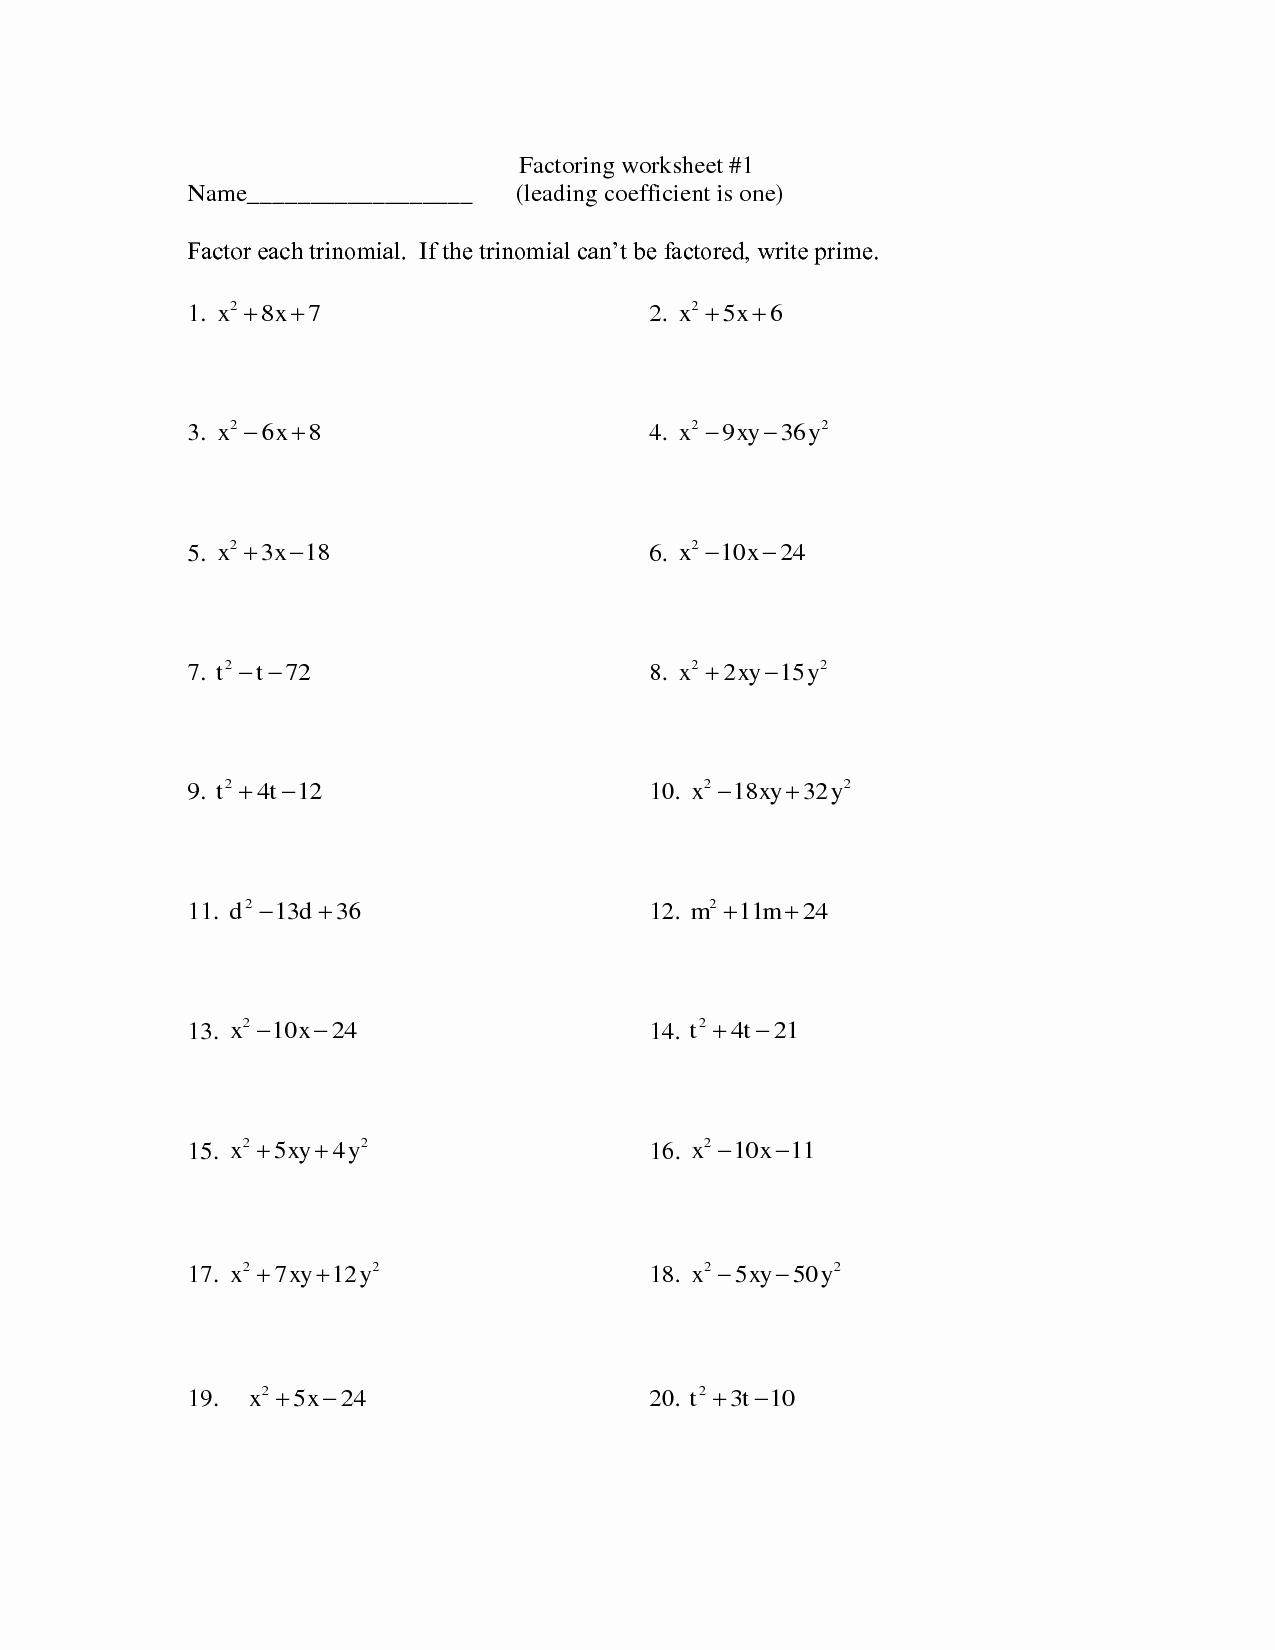 Factoring Worksheet Algebra 2 Inspirational 11 Best Of Factoring Worksheets Algebra Ii